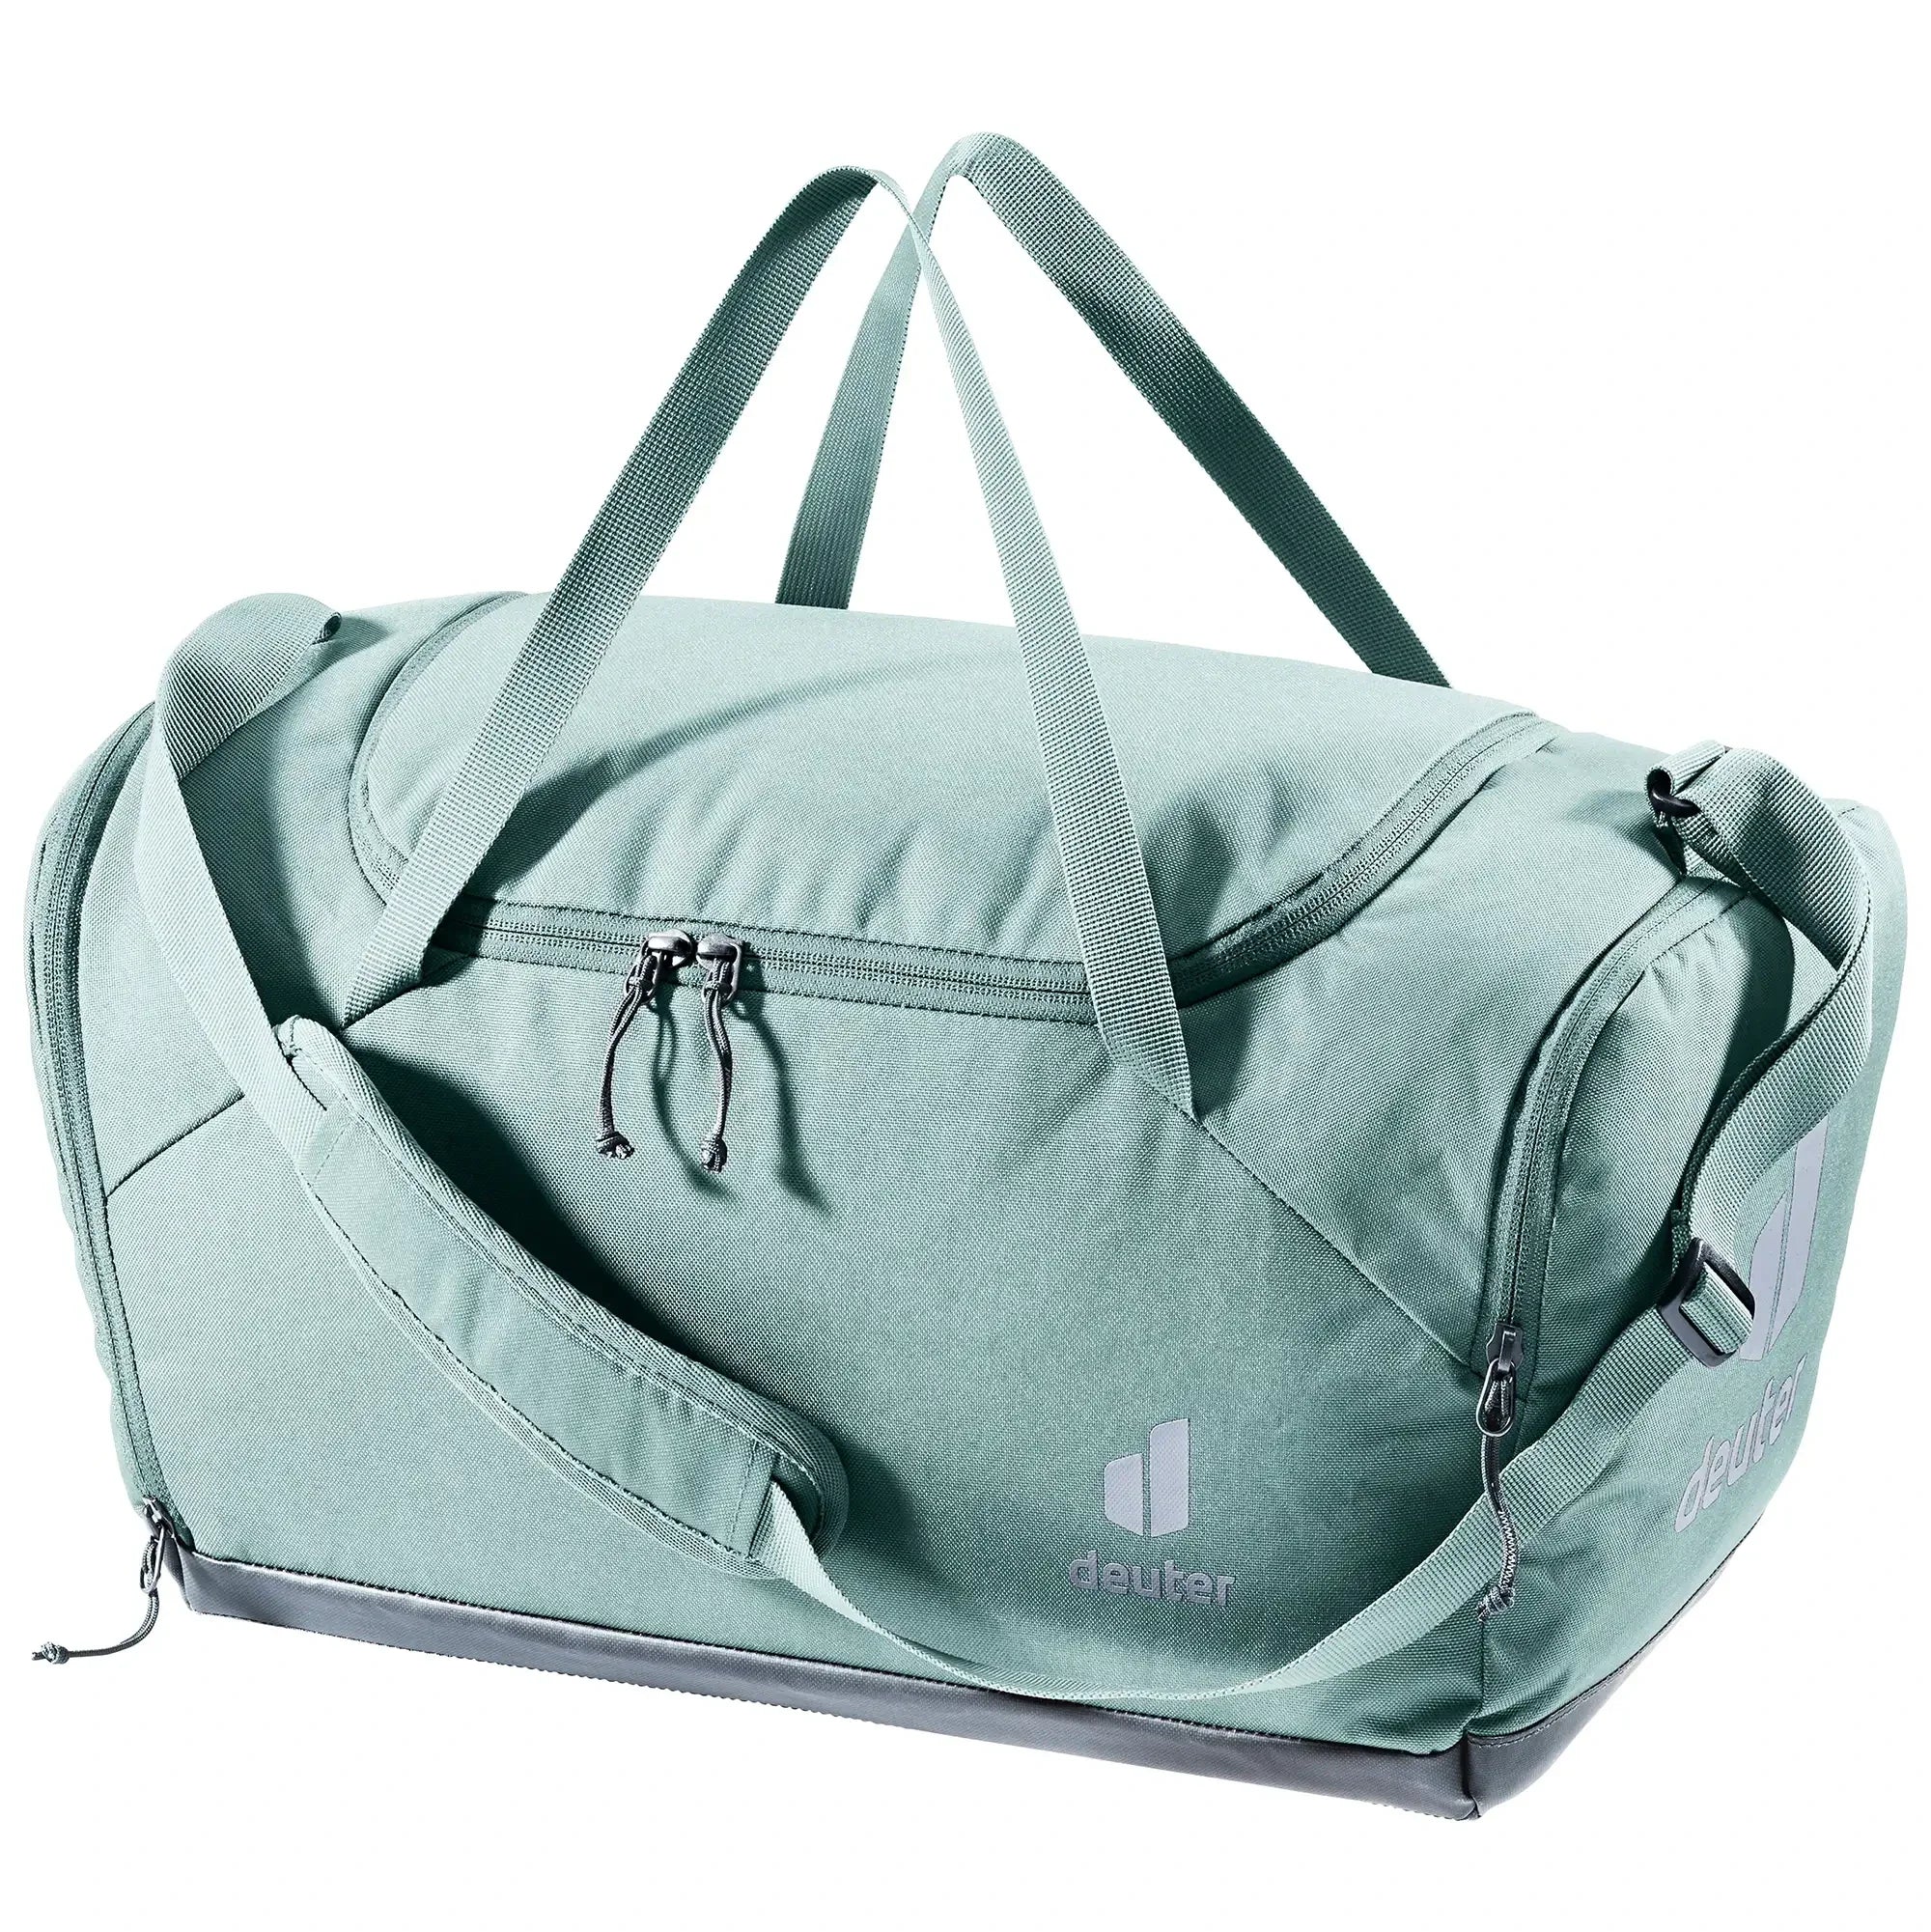 Deuter Daypack Hopper sports bag 48 cm - Jade-Graphite